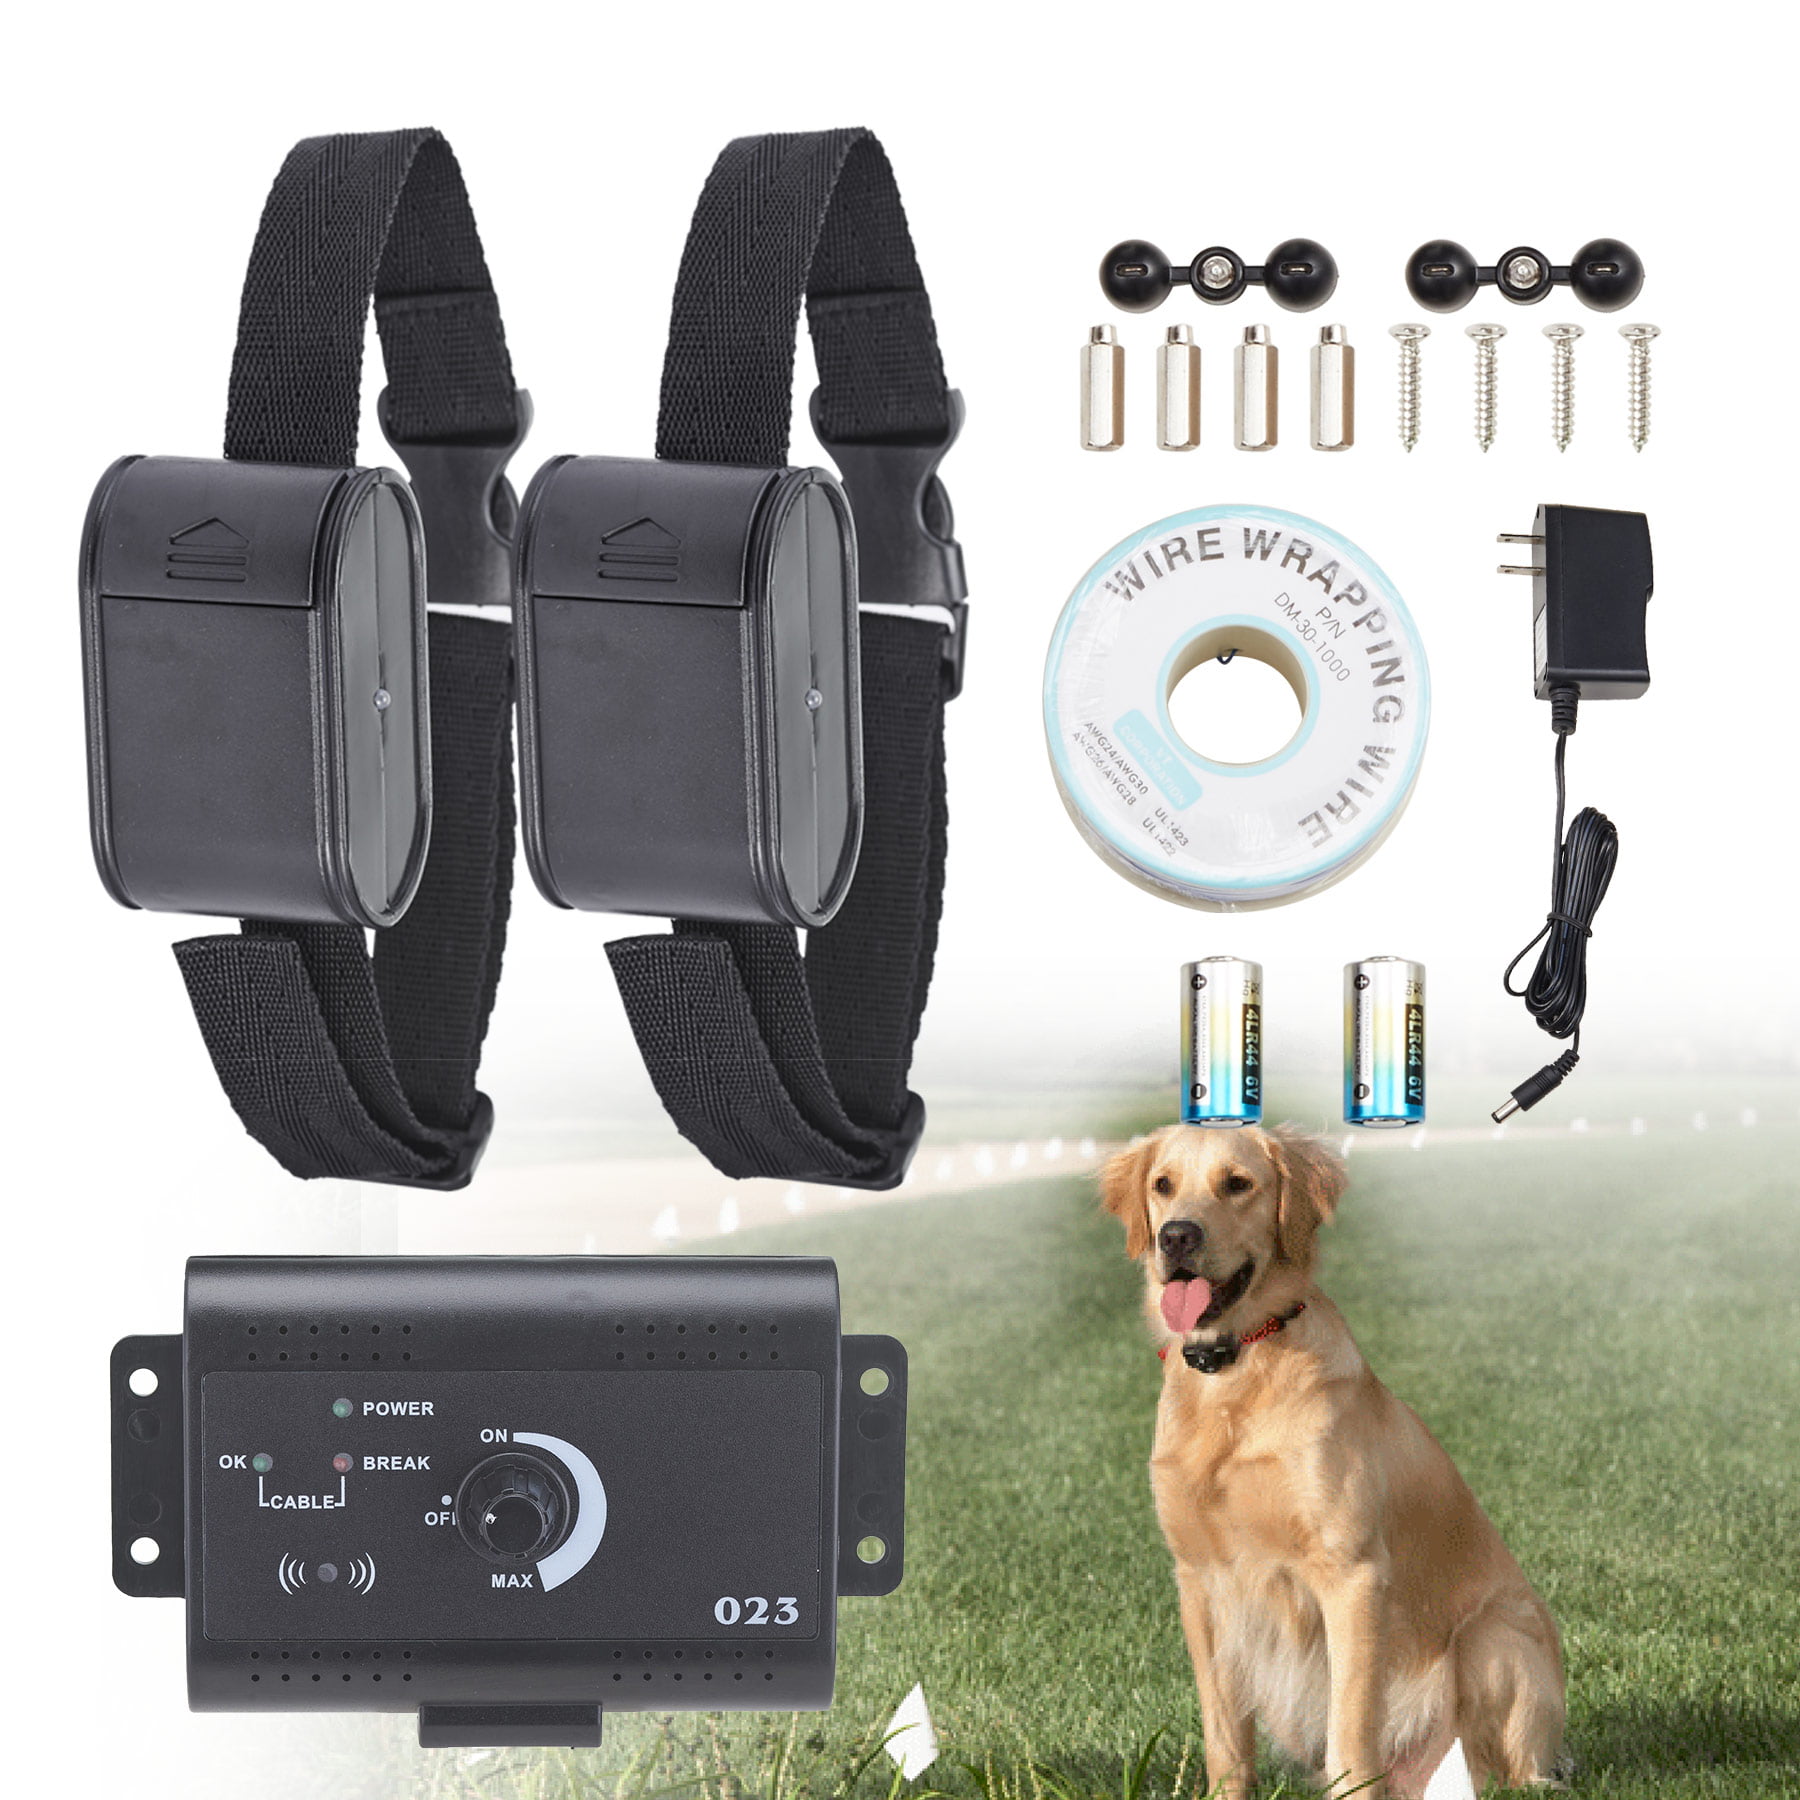 2 Dogs Underground Shock Audio Collar Dog Training Pet safe Electric Fence